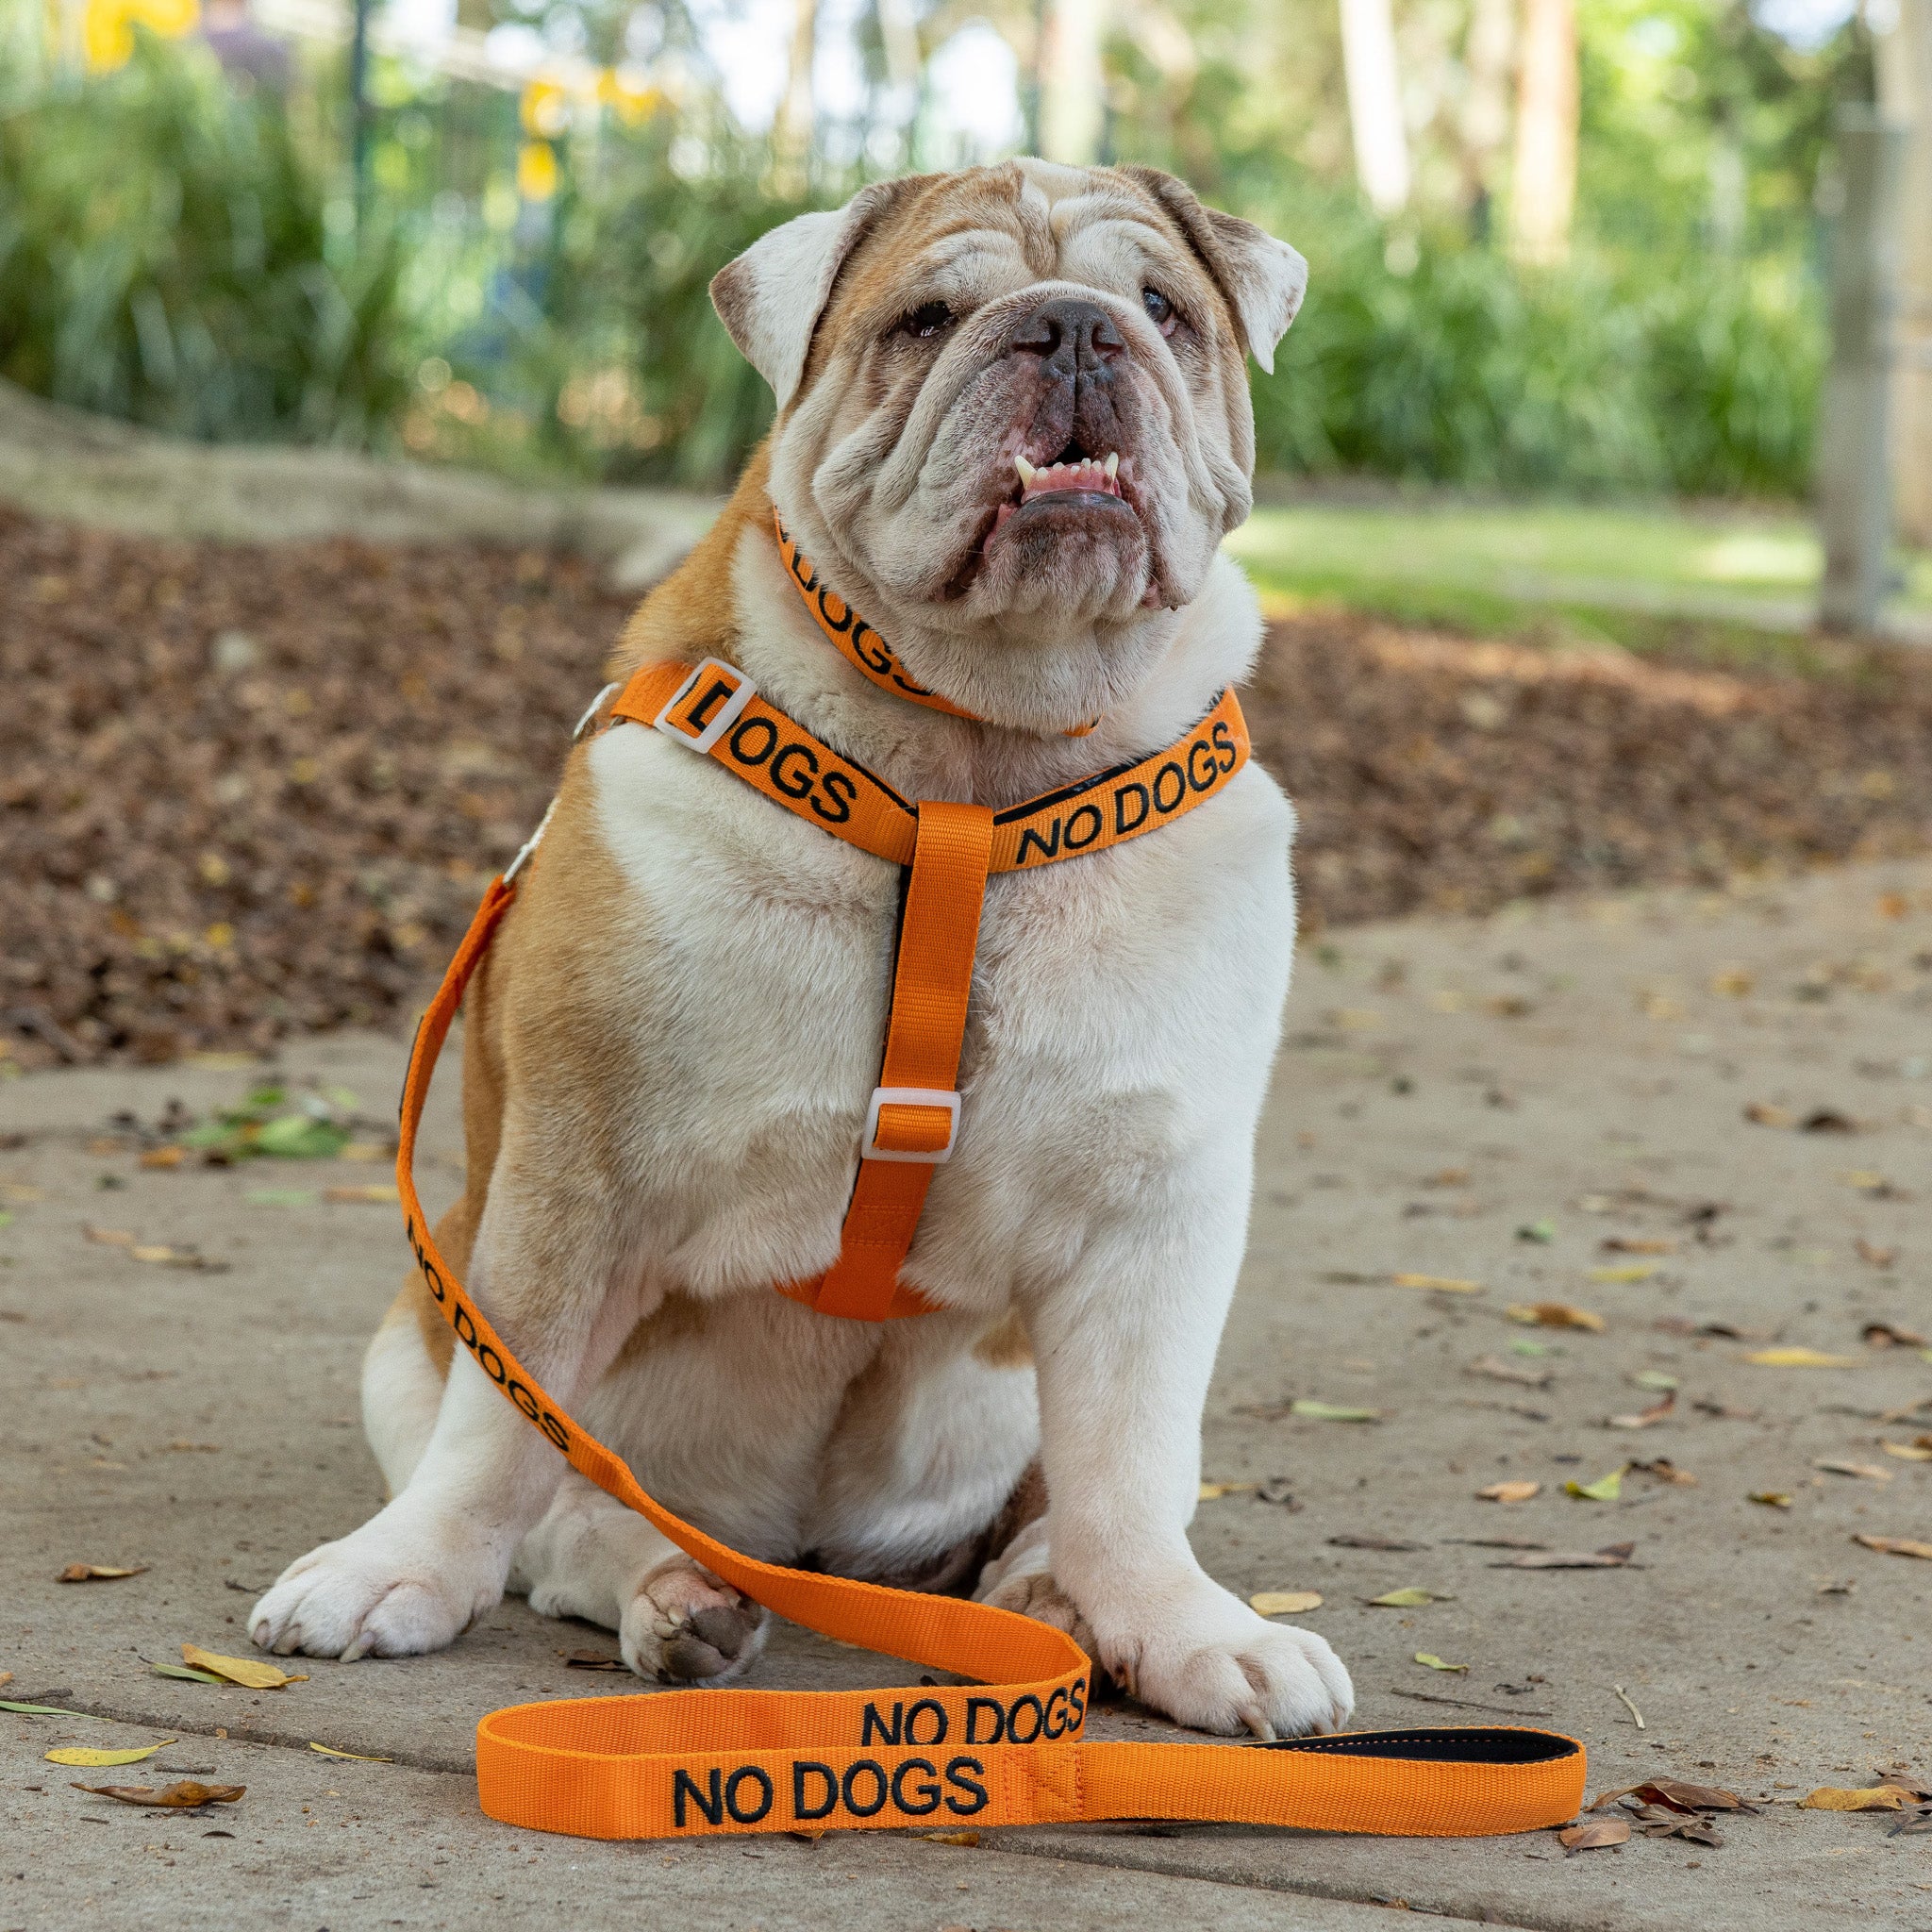 Dexil Friendly Dog Collars orange NO DOGS Standard 120cm (4ft) Lead